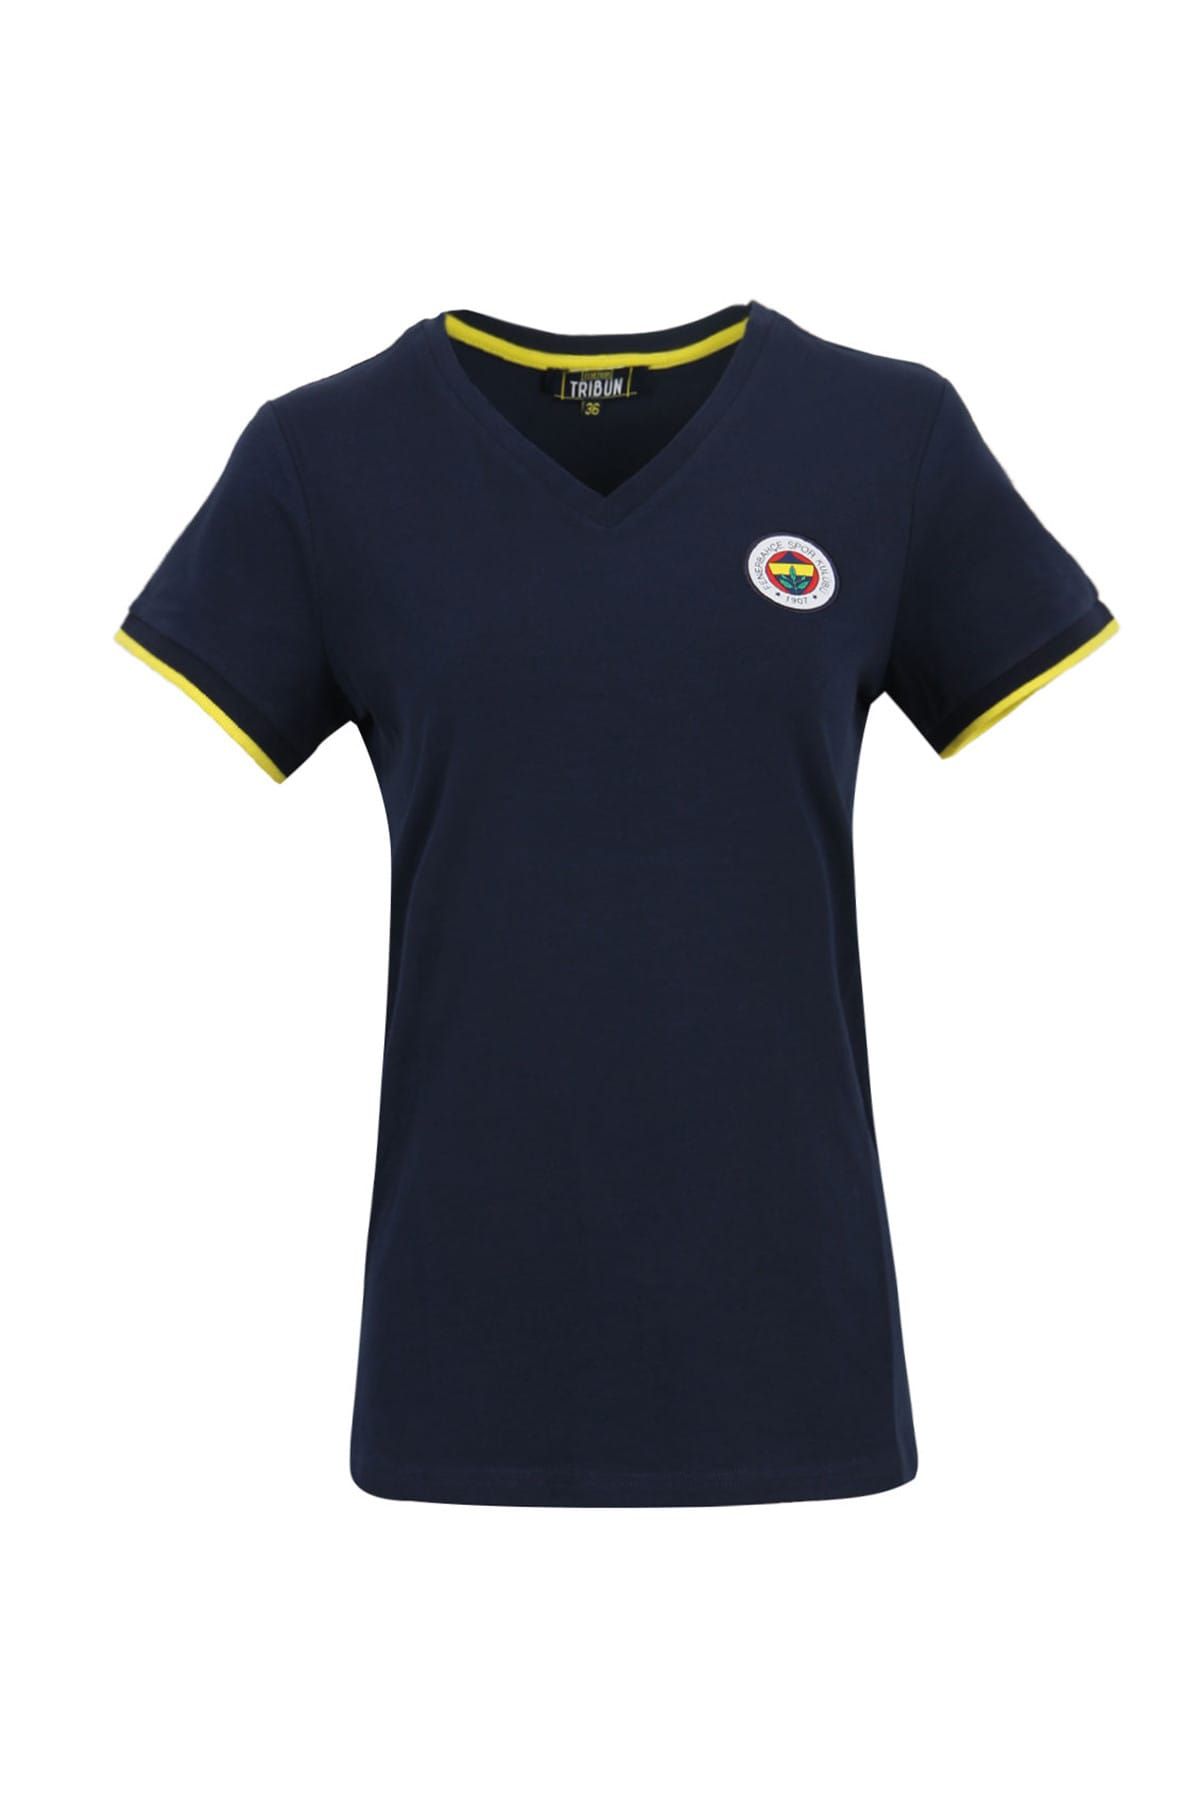 Fenerbahçe KADIN TRIBUN BASIC SHIRT-A-407-0-40